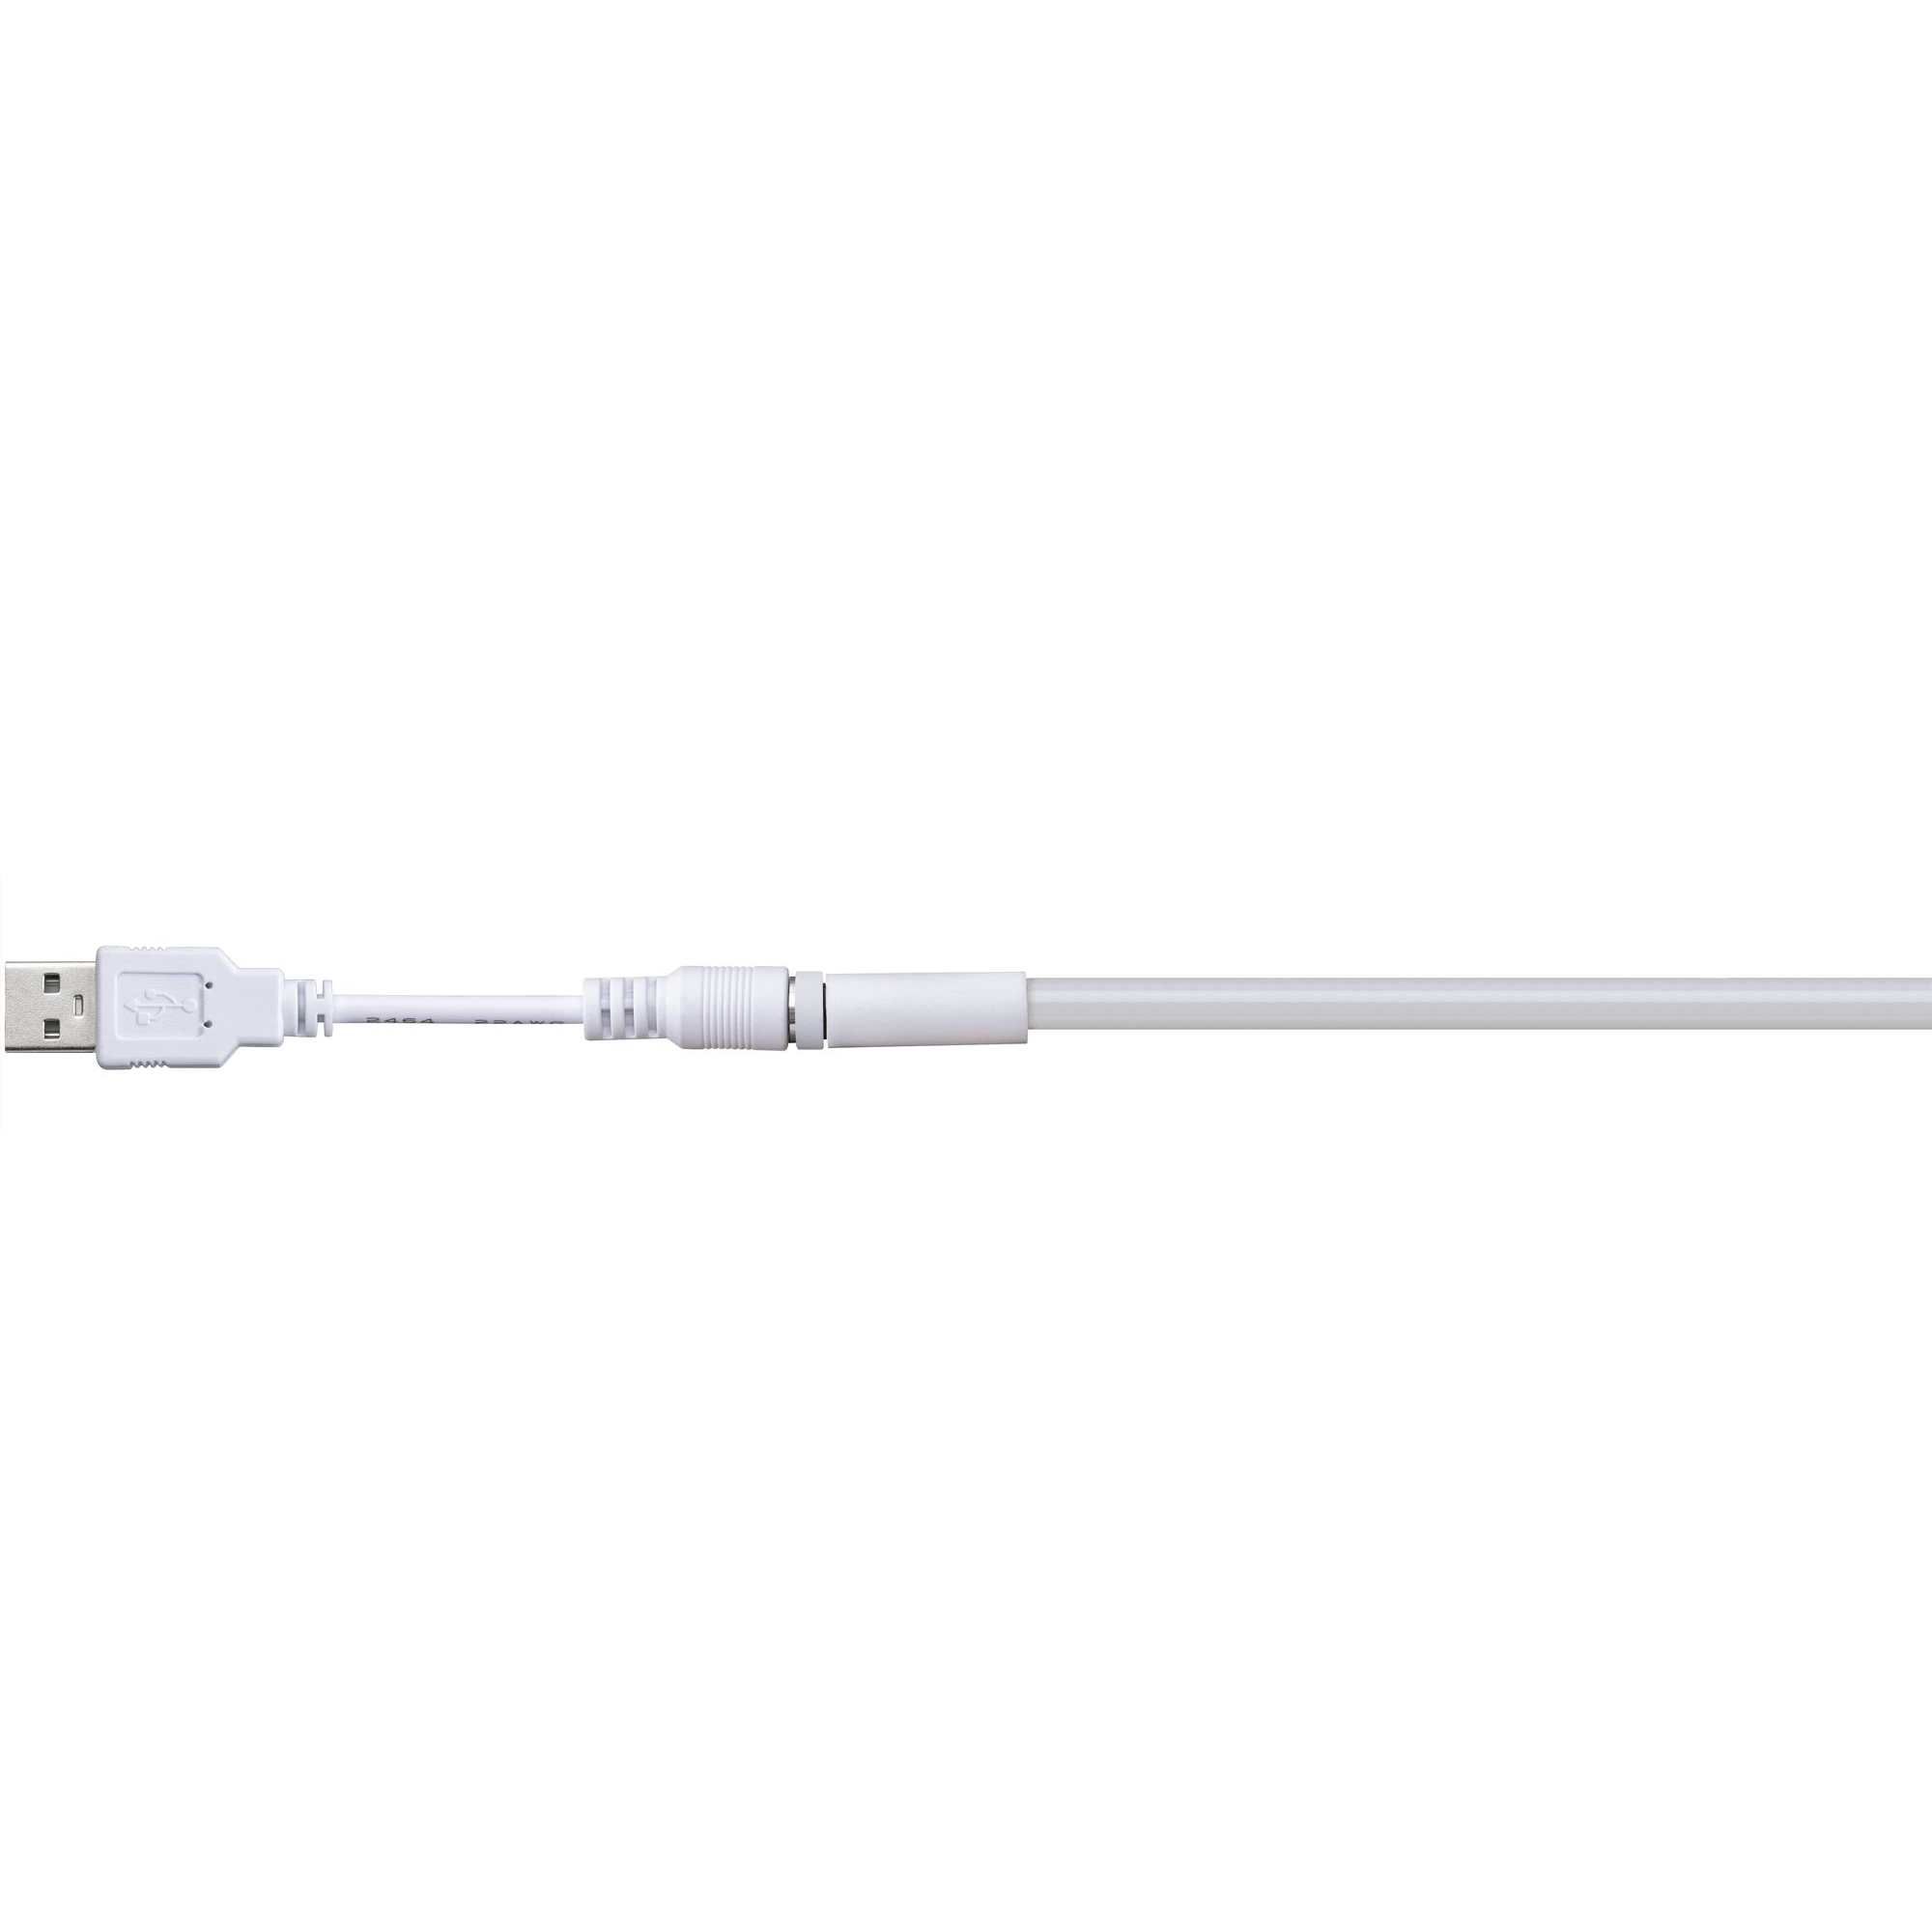 Neon-Streifen 'Colorflex' 1 m 4,5 W 10 lm weiß USB + product picture